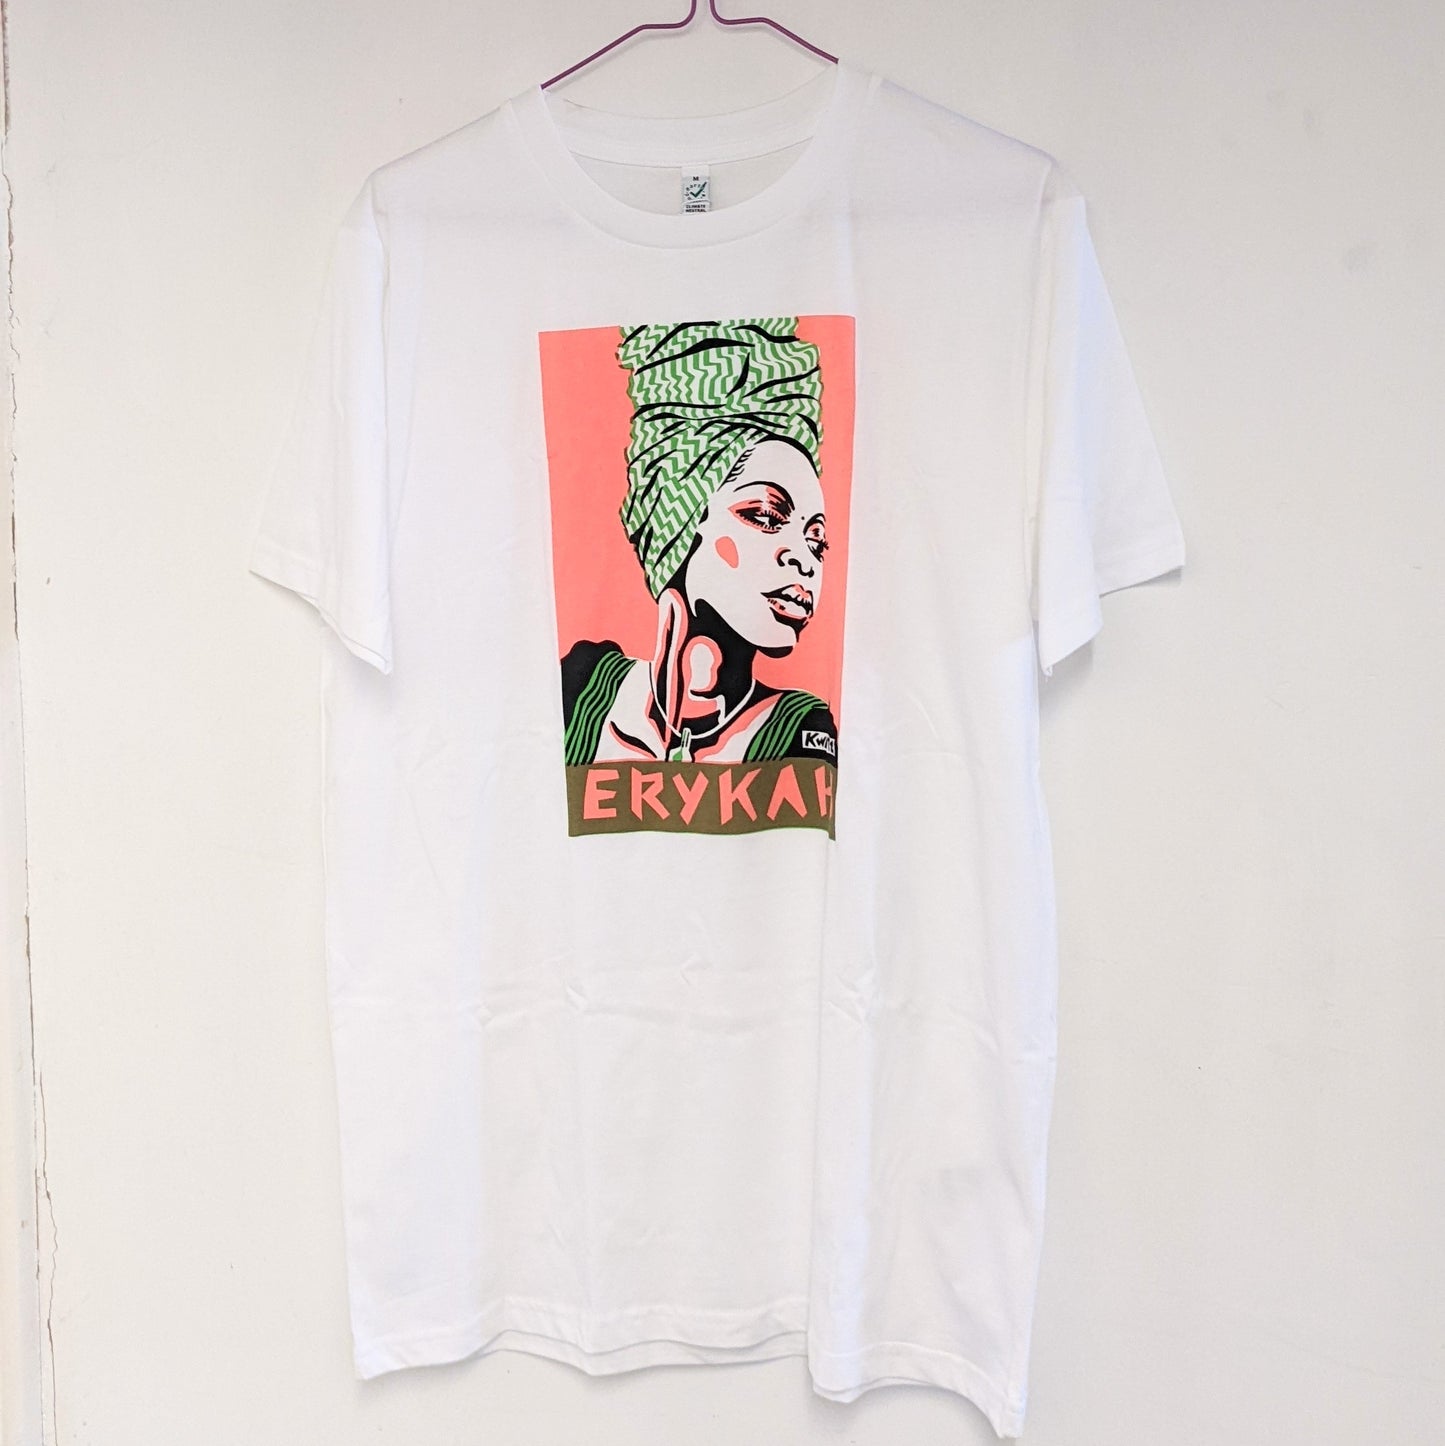 Erykah Badu screen printed t-shirt